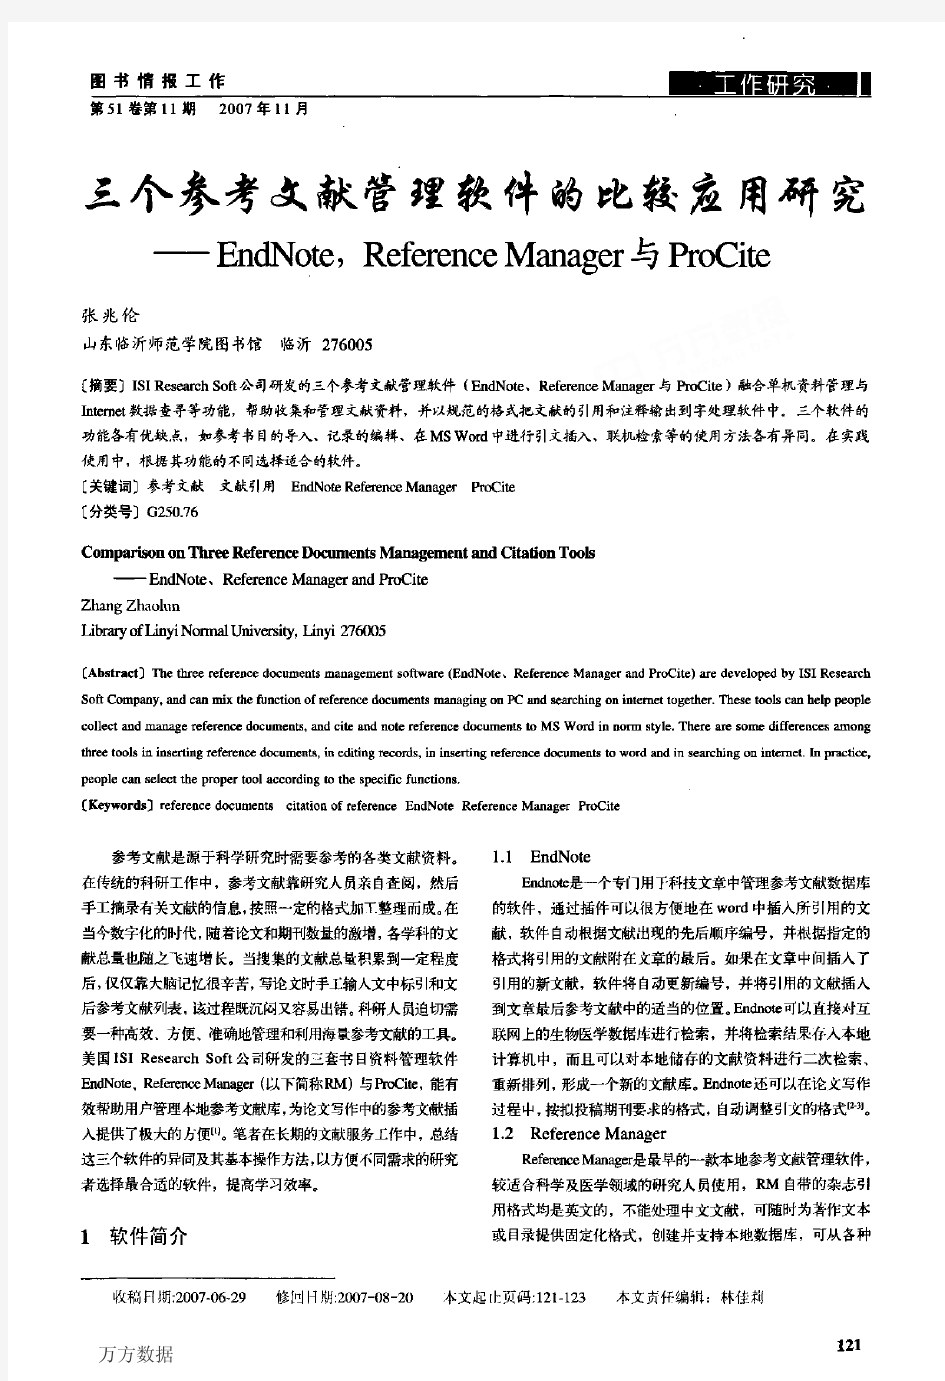 三个参考文献管理软件的比较应用研究——EndNoteReference+Manager与ProCite